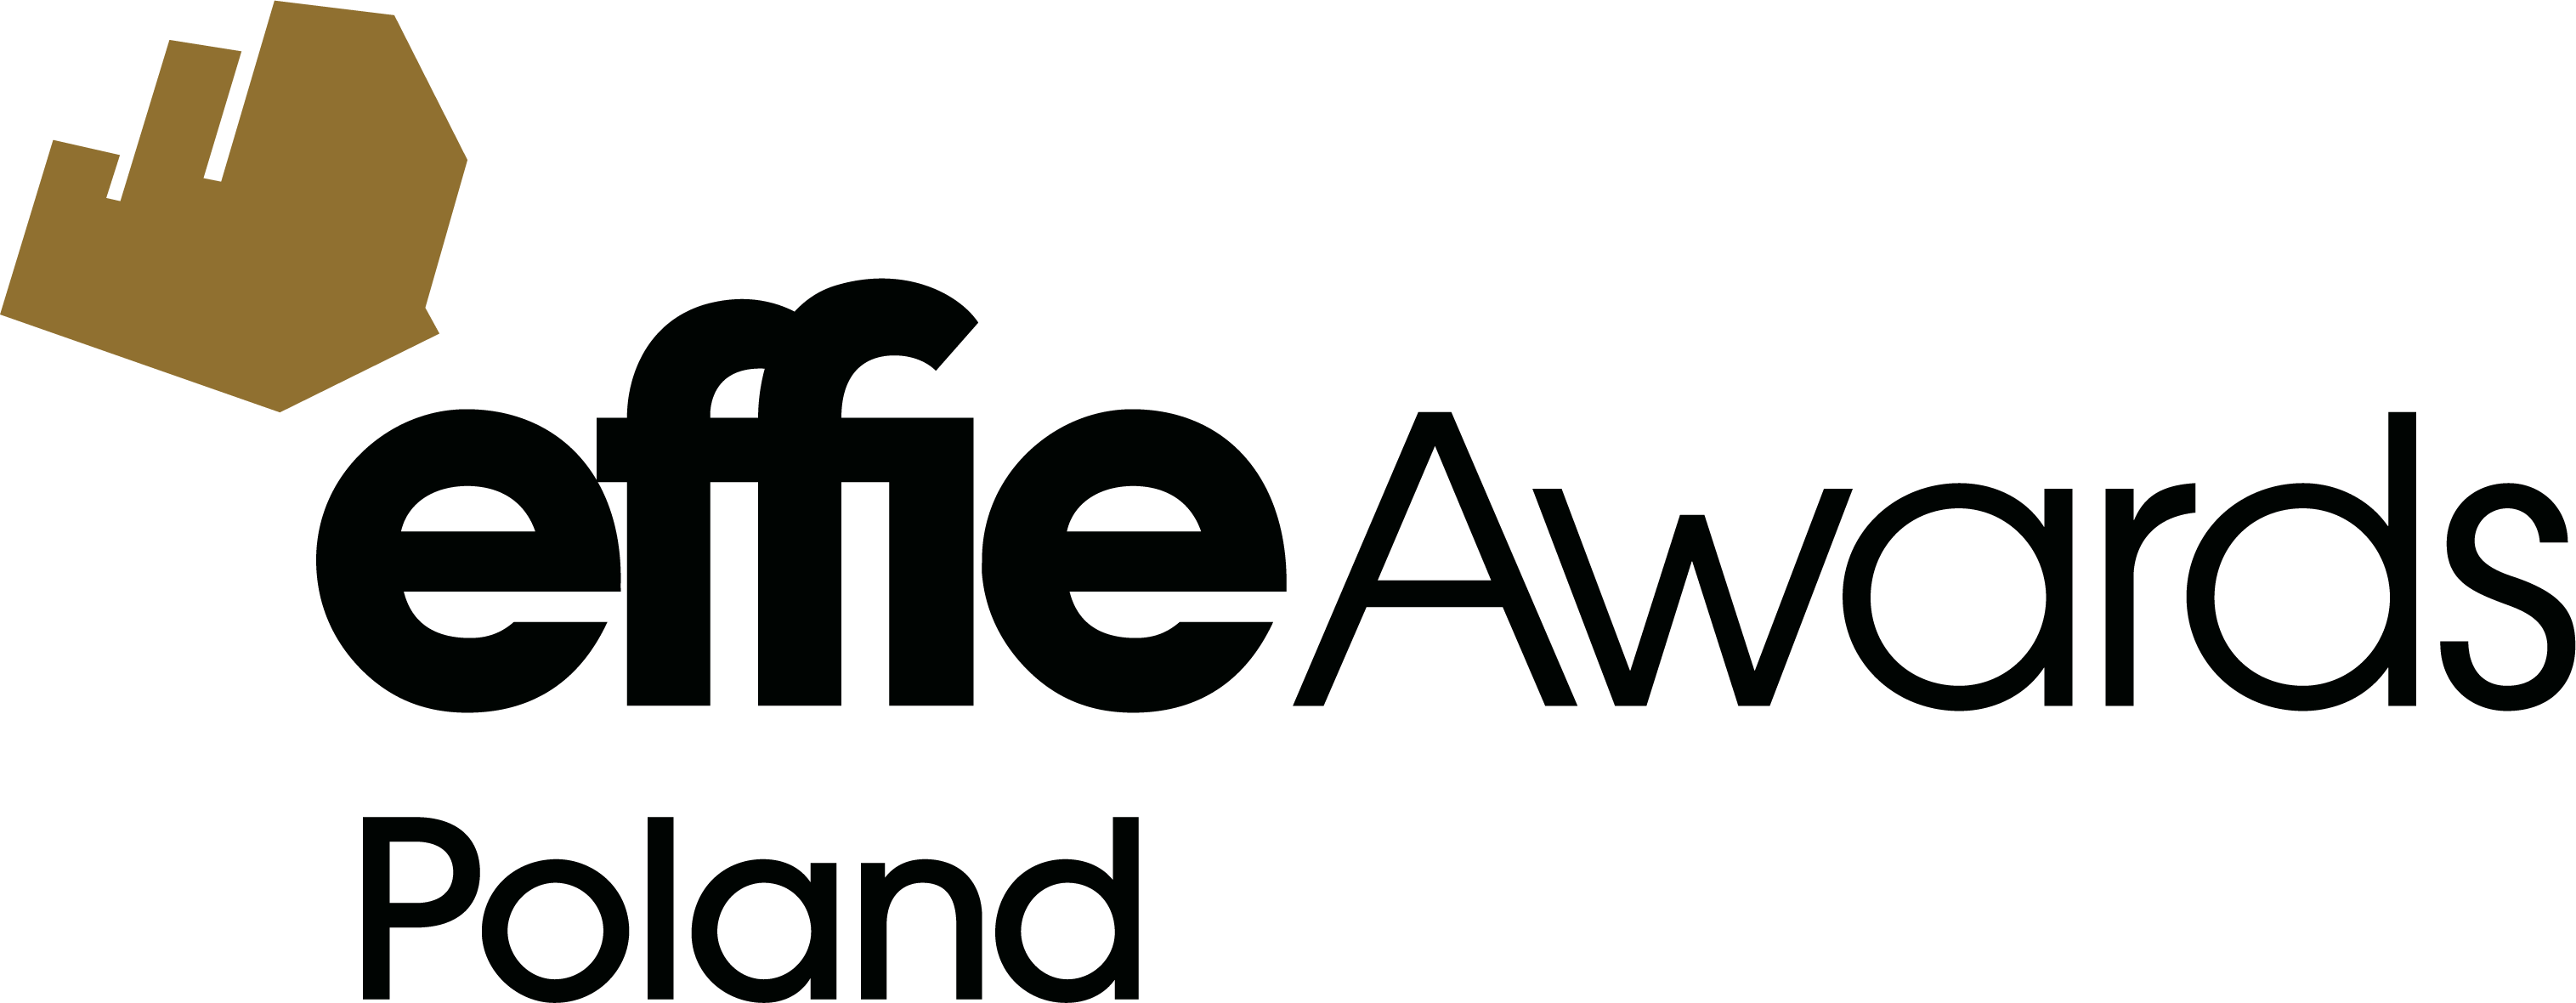 Logo Effie